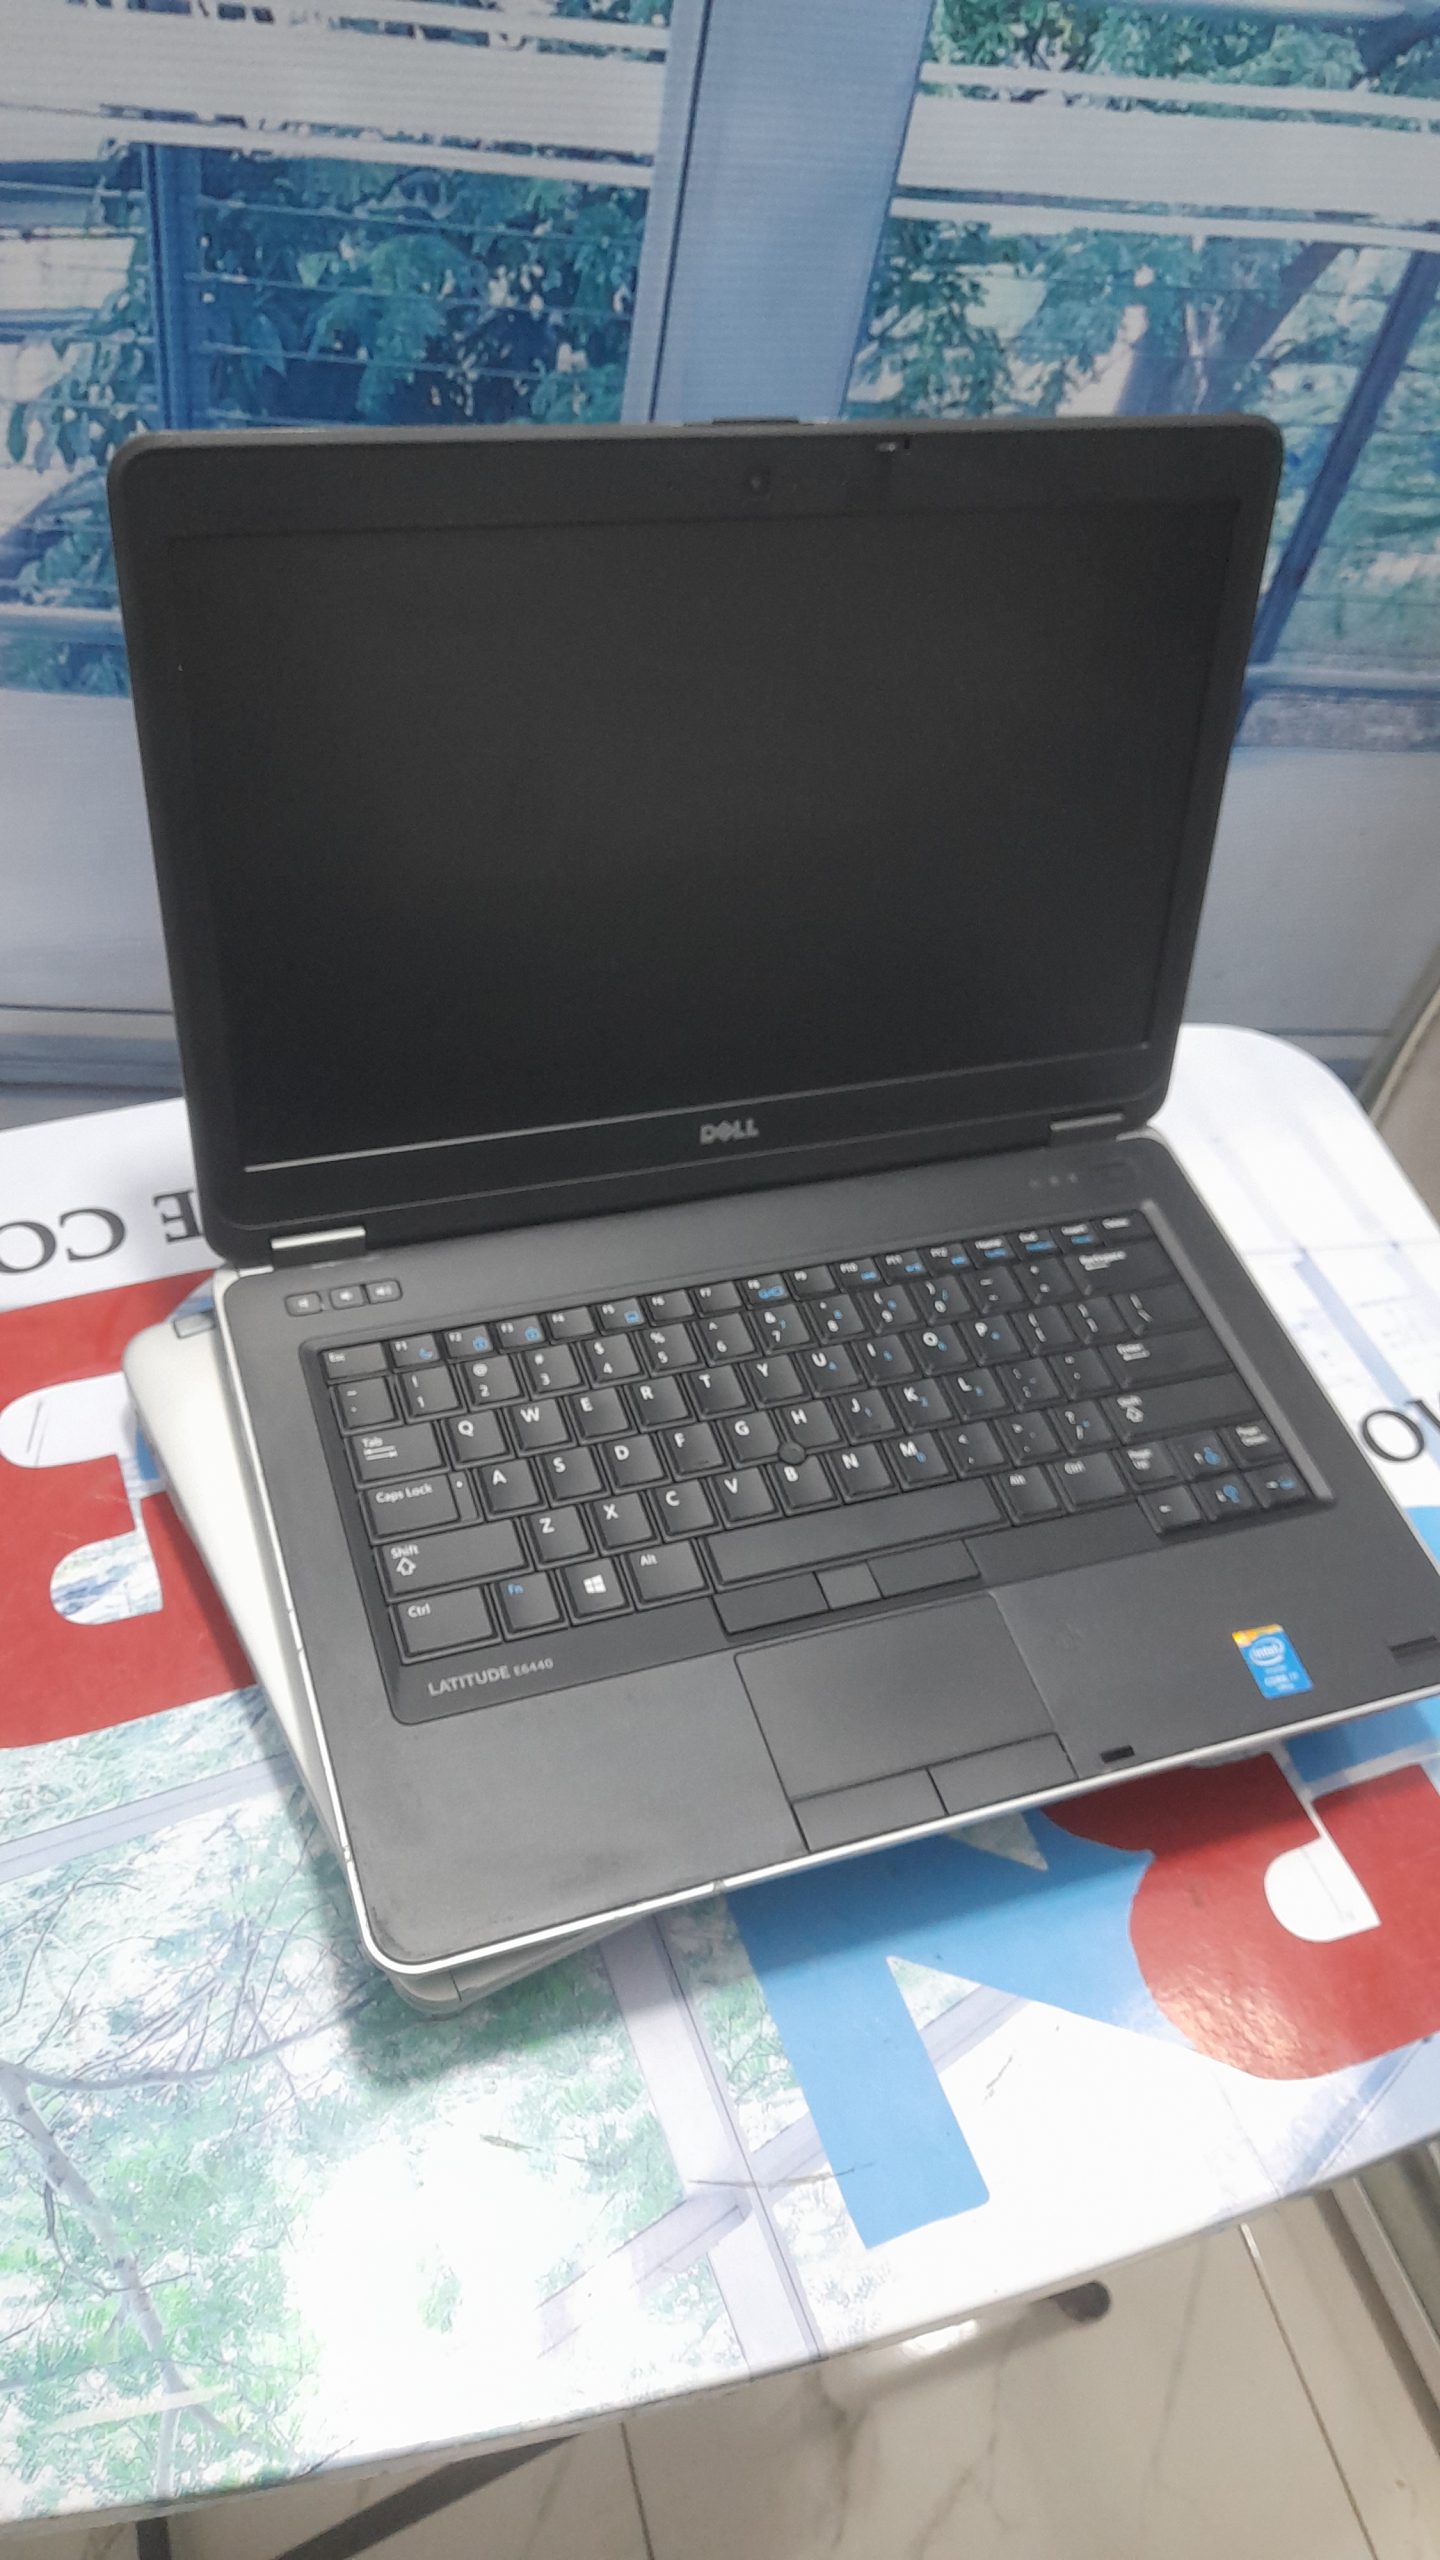 Dell latitude E6440 – Intel Core i7-4600M CPU @2.80ghz 2.90ghz – Keyboard light – 500GB HDD – 8GB RAM -DVD RW – HDMI – 2GB total graphics